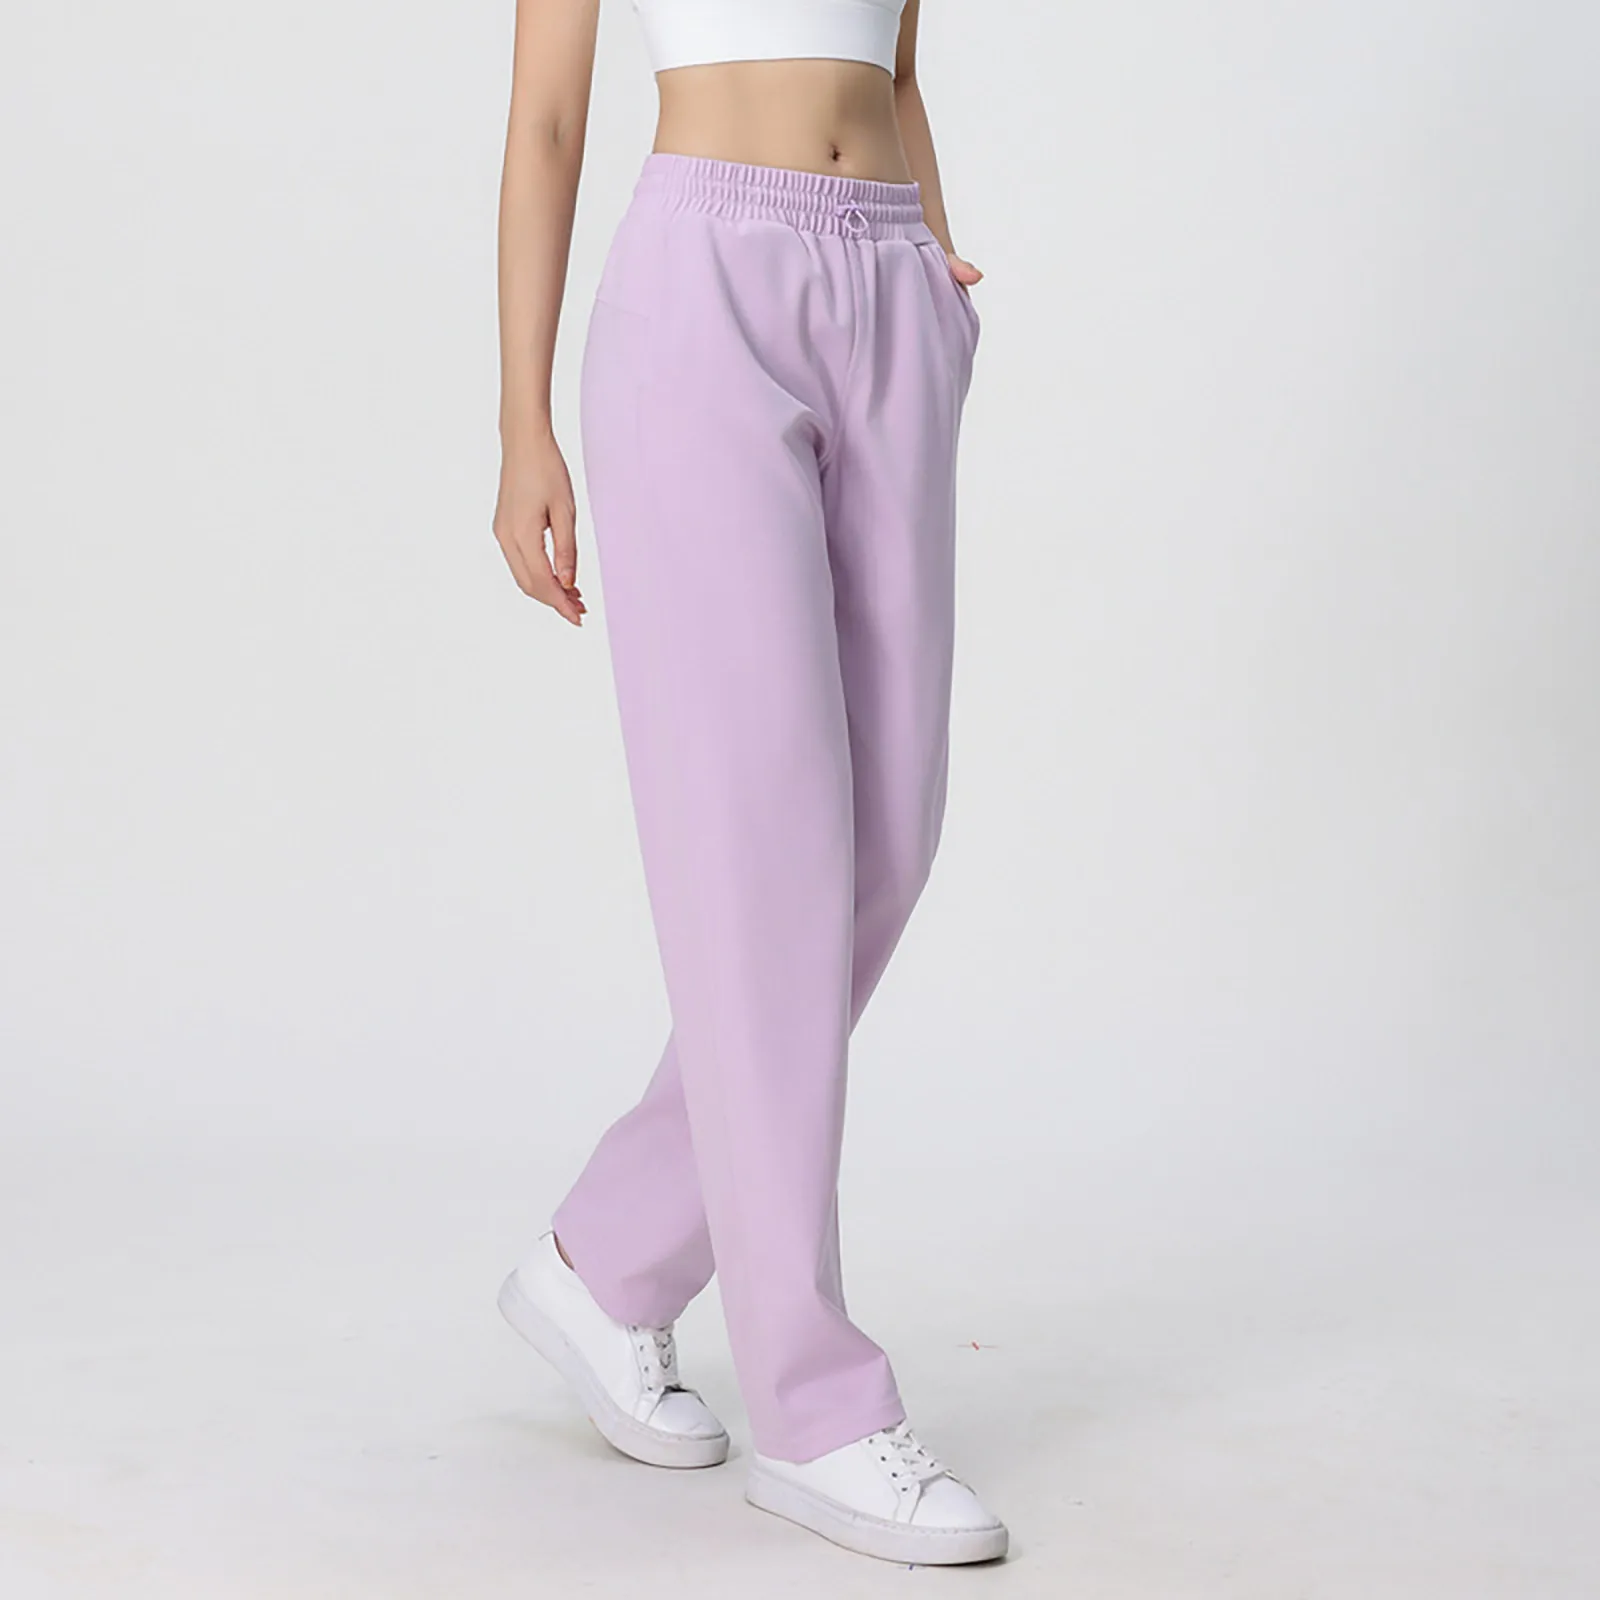 Women's Elastic Panty Leggings Casual Loose Yoga Pants Full Length Trousers  New | eBay